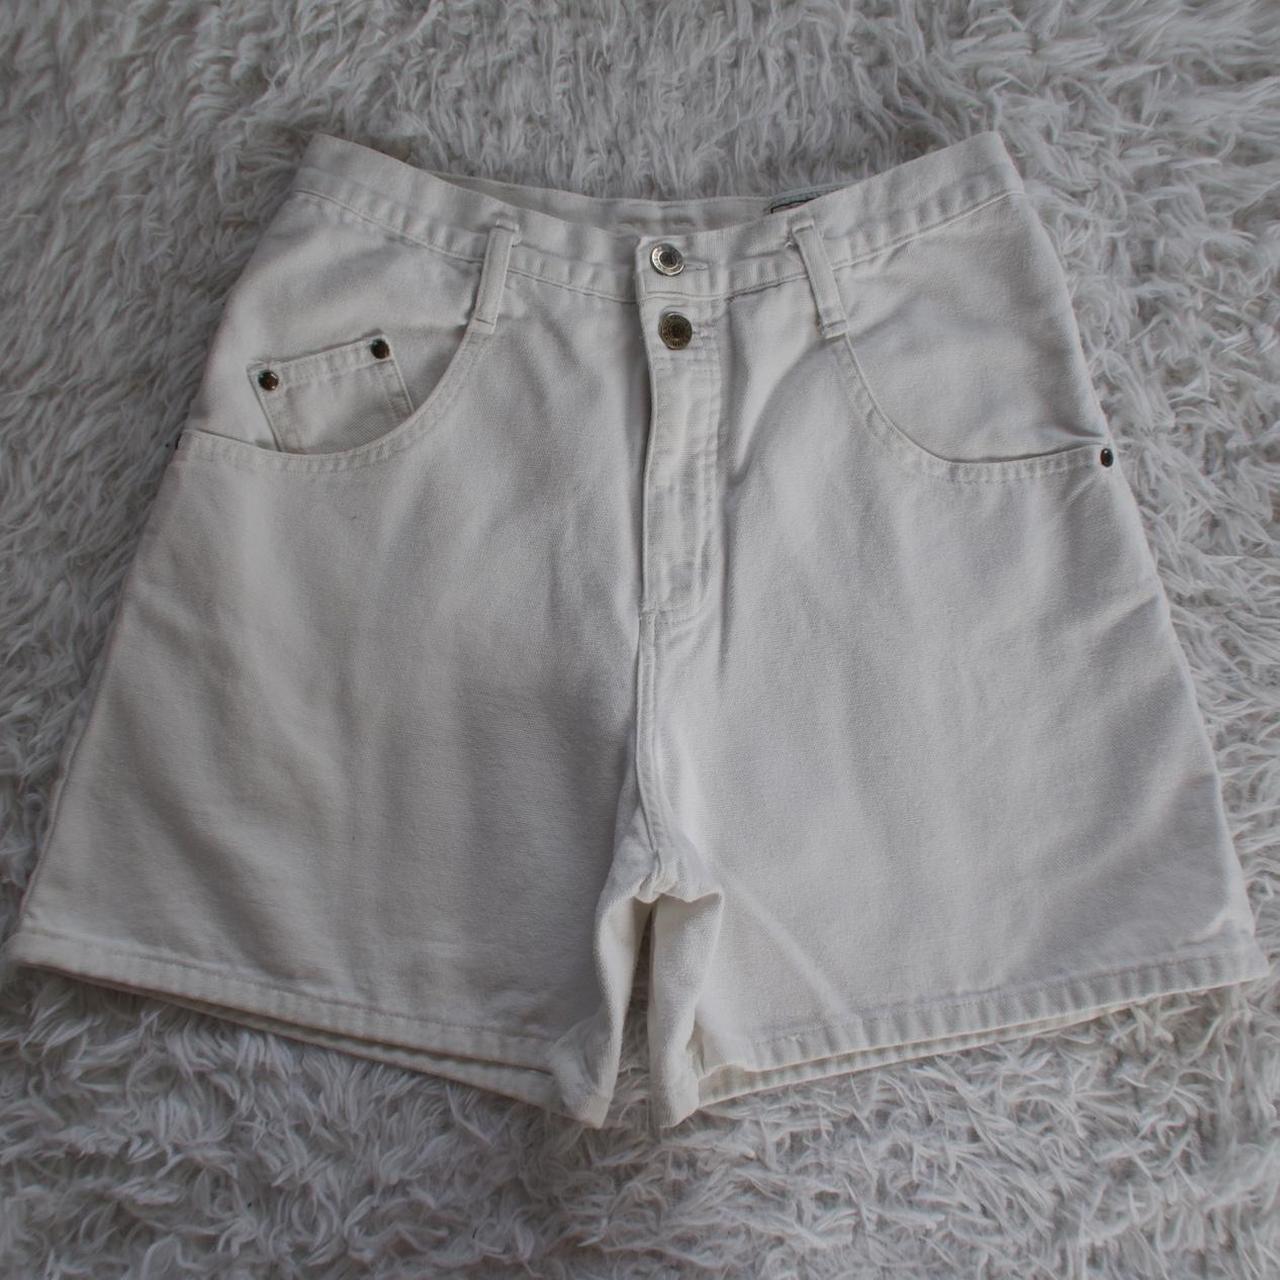 vintage white jean shorts! - Depop pilling throughout... has